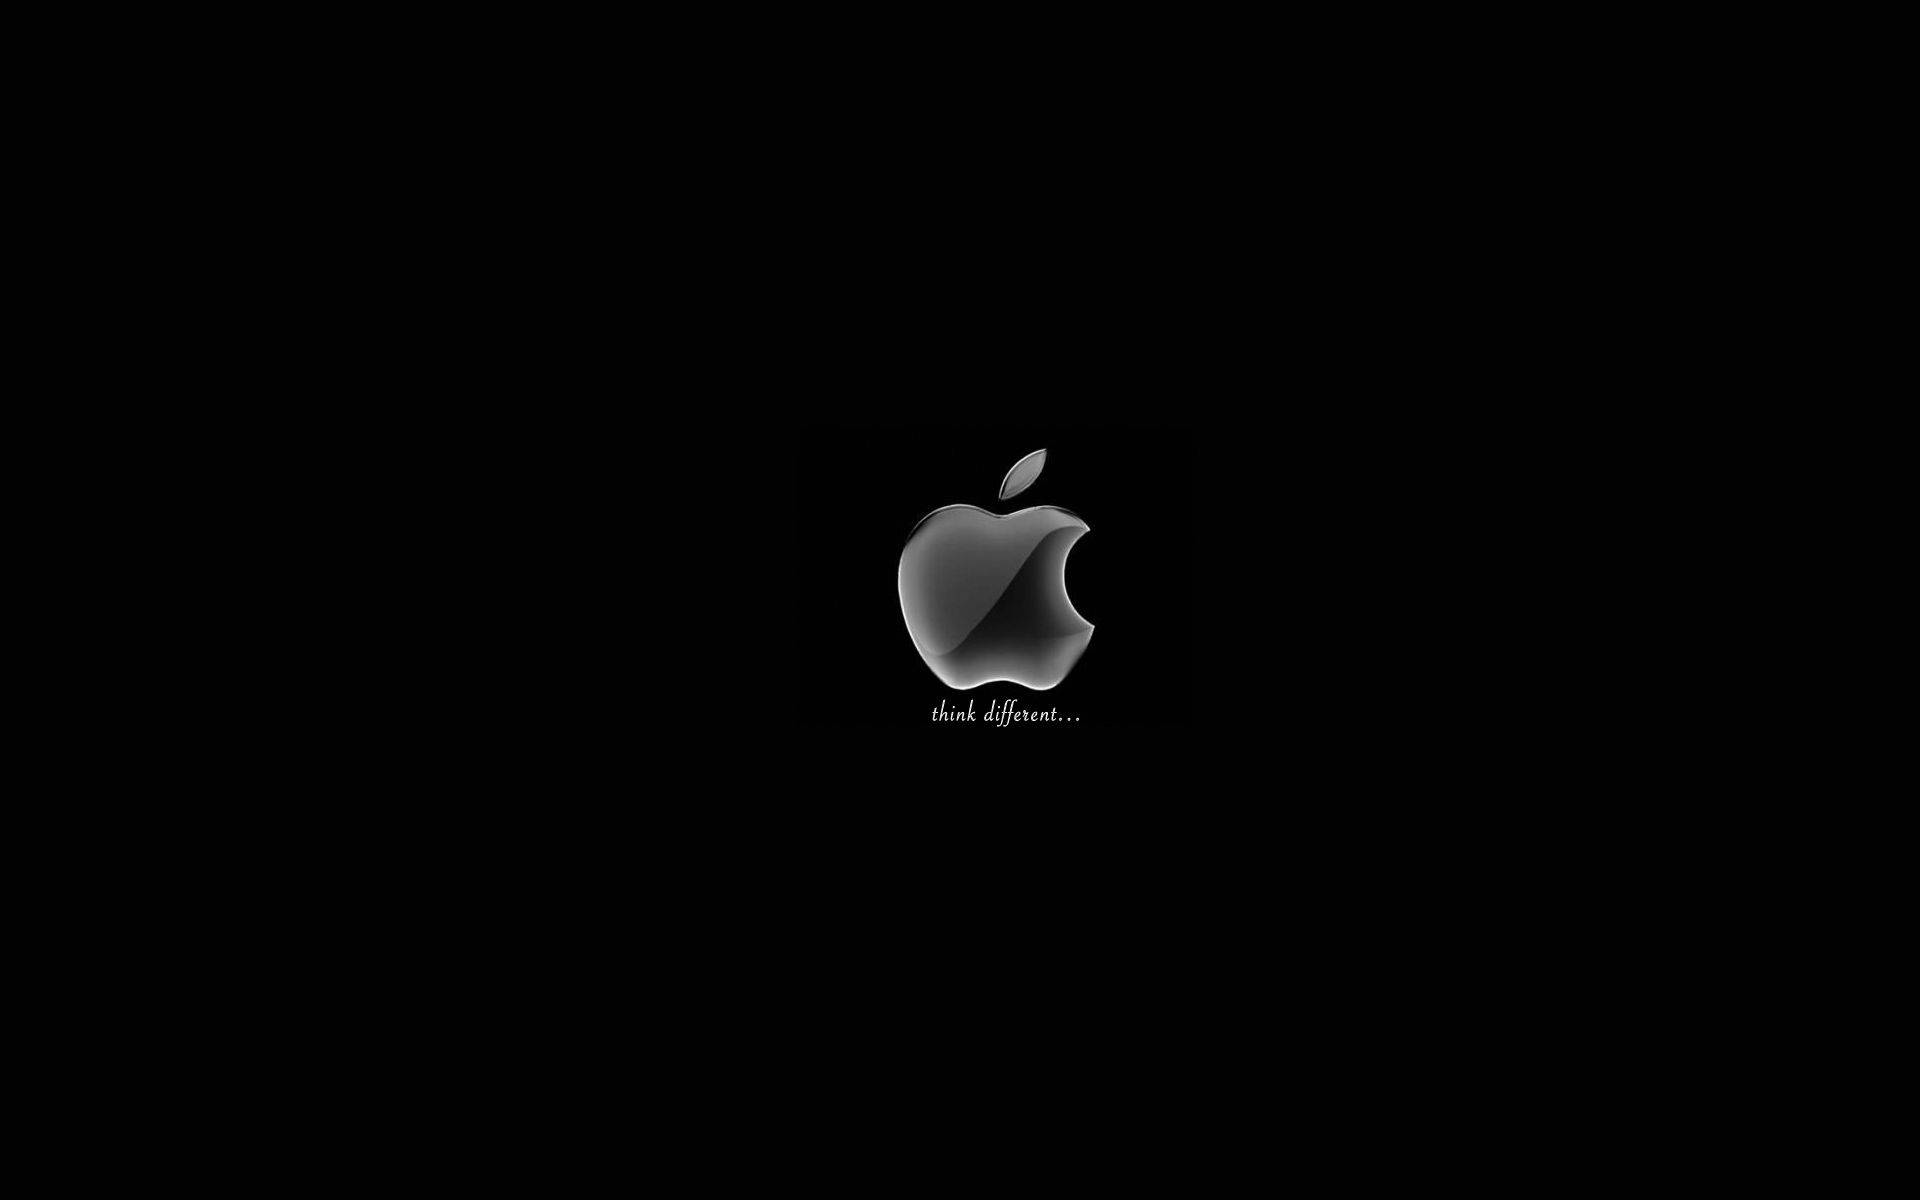 Apple Logo Think Different On Black Background